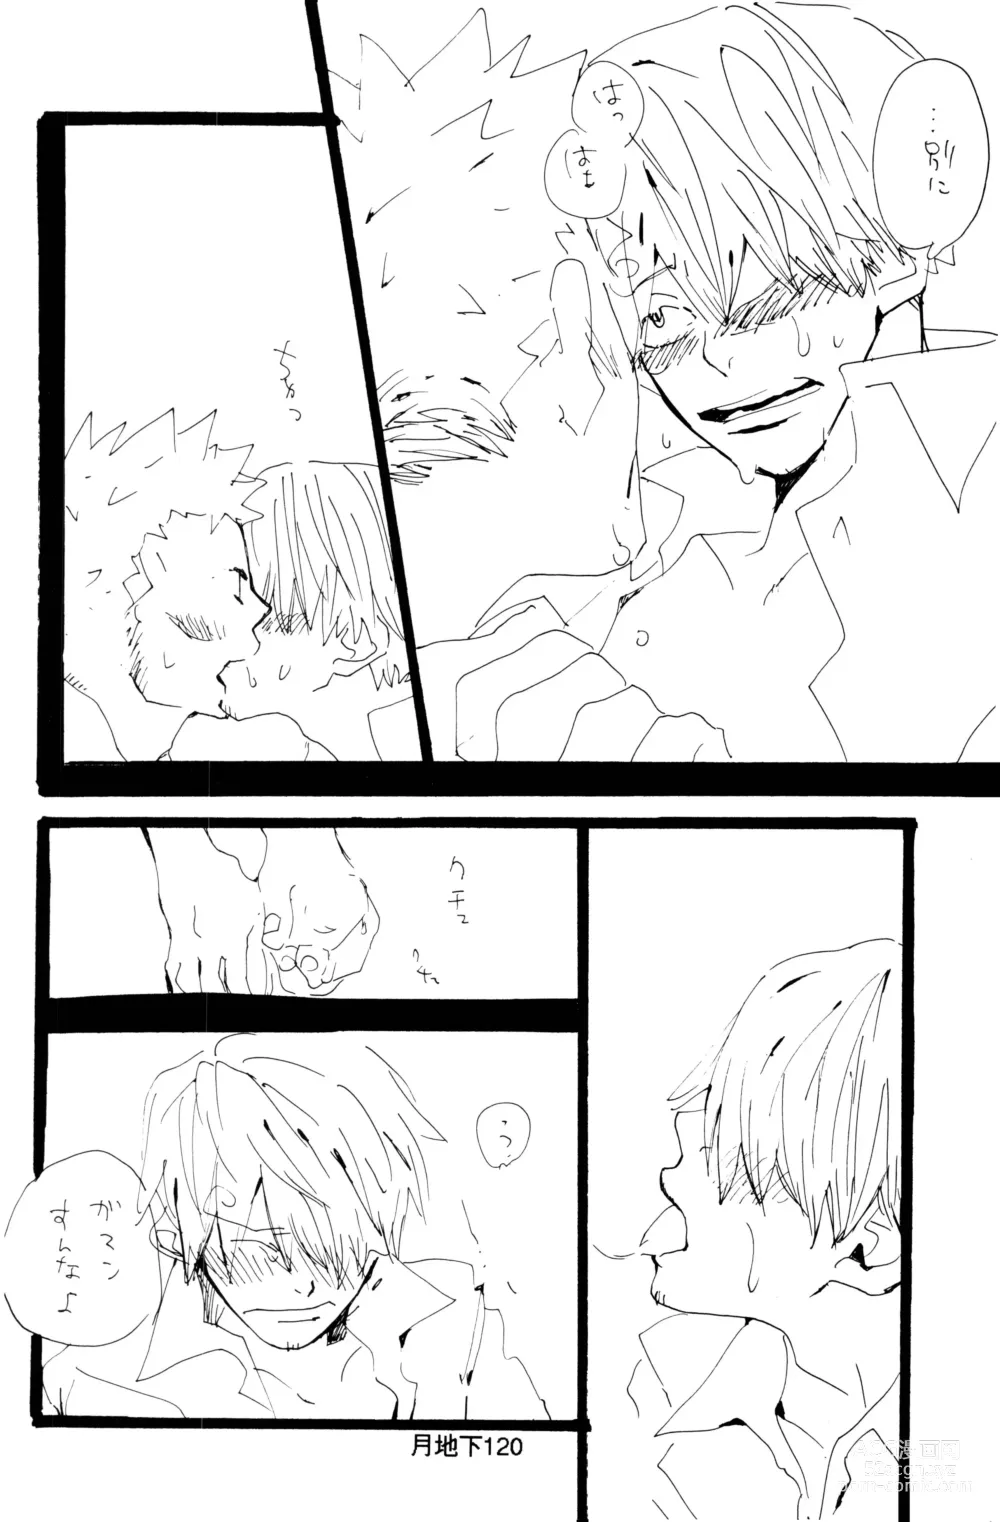 Page 48 of doujinshi Bara no Hana